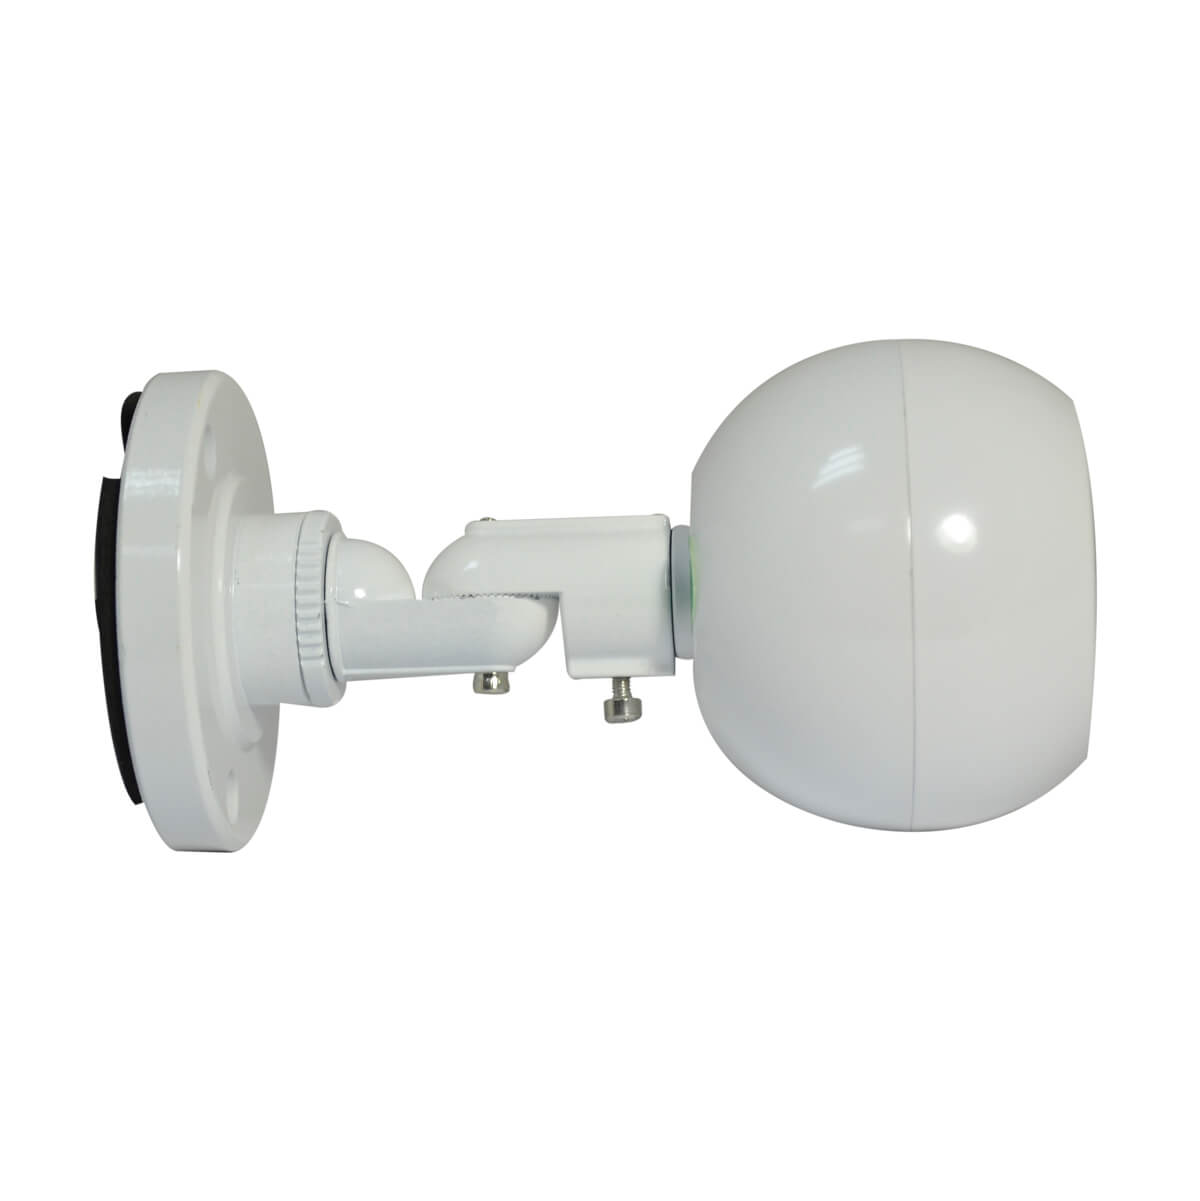 Camara tipo domo, Sensor HD CCD 1/4, resolucion 700TVL, 24 LED, 20m IR